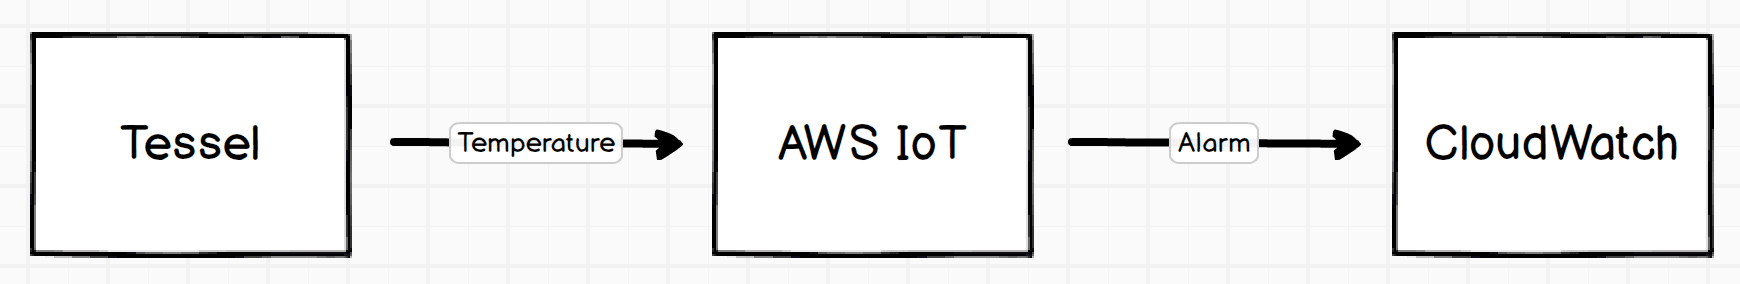 Setup of IoT example